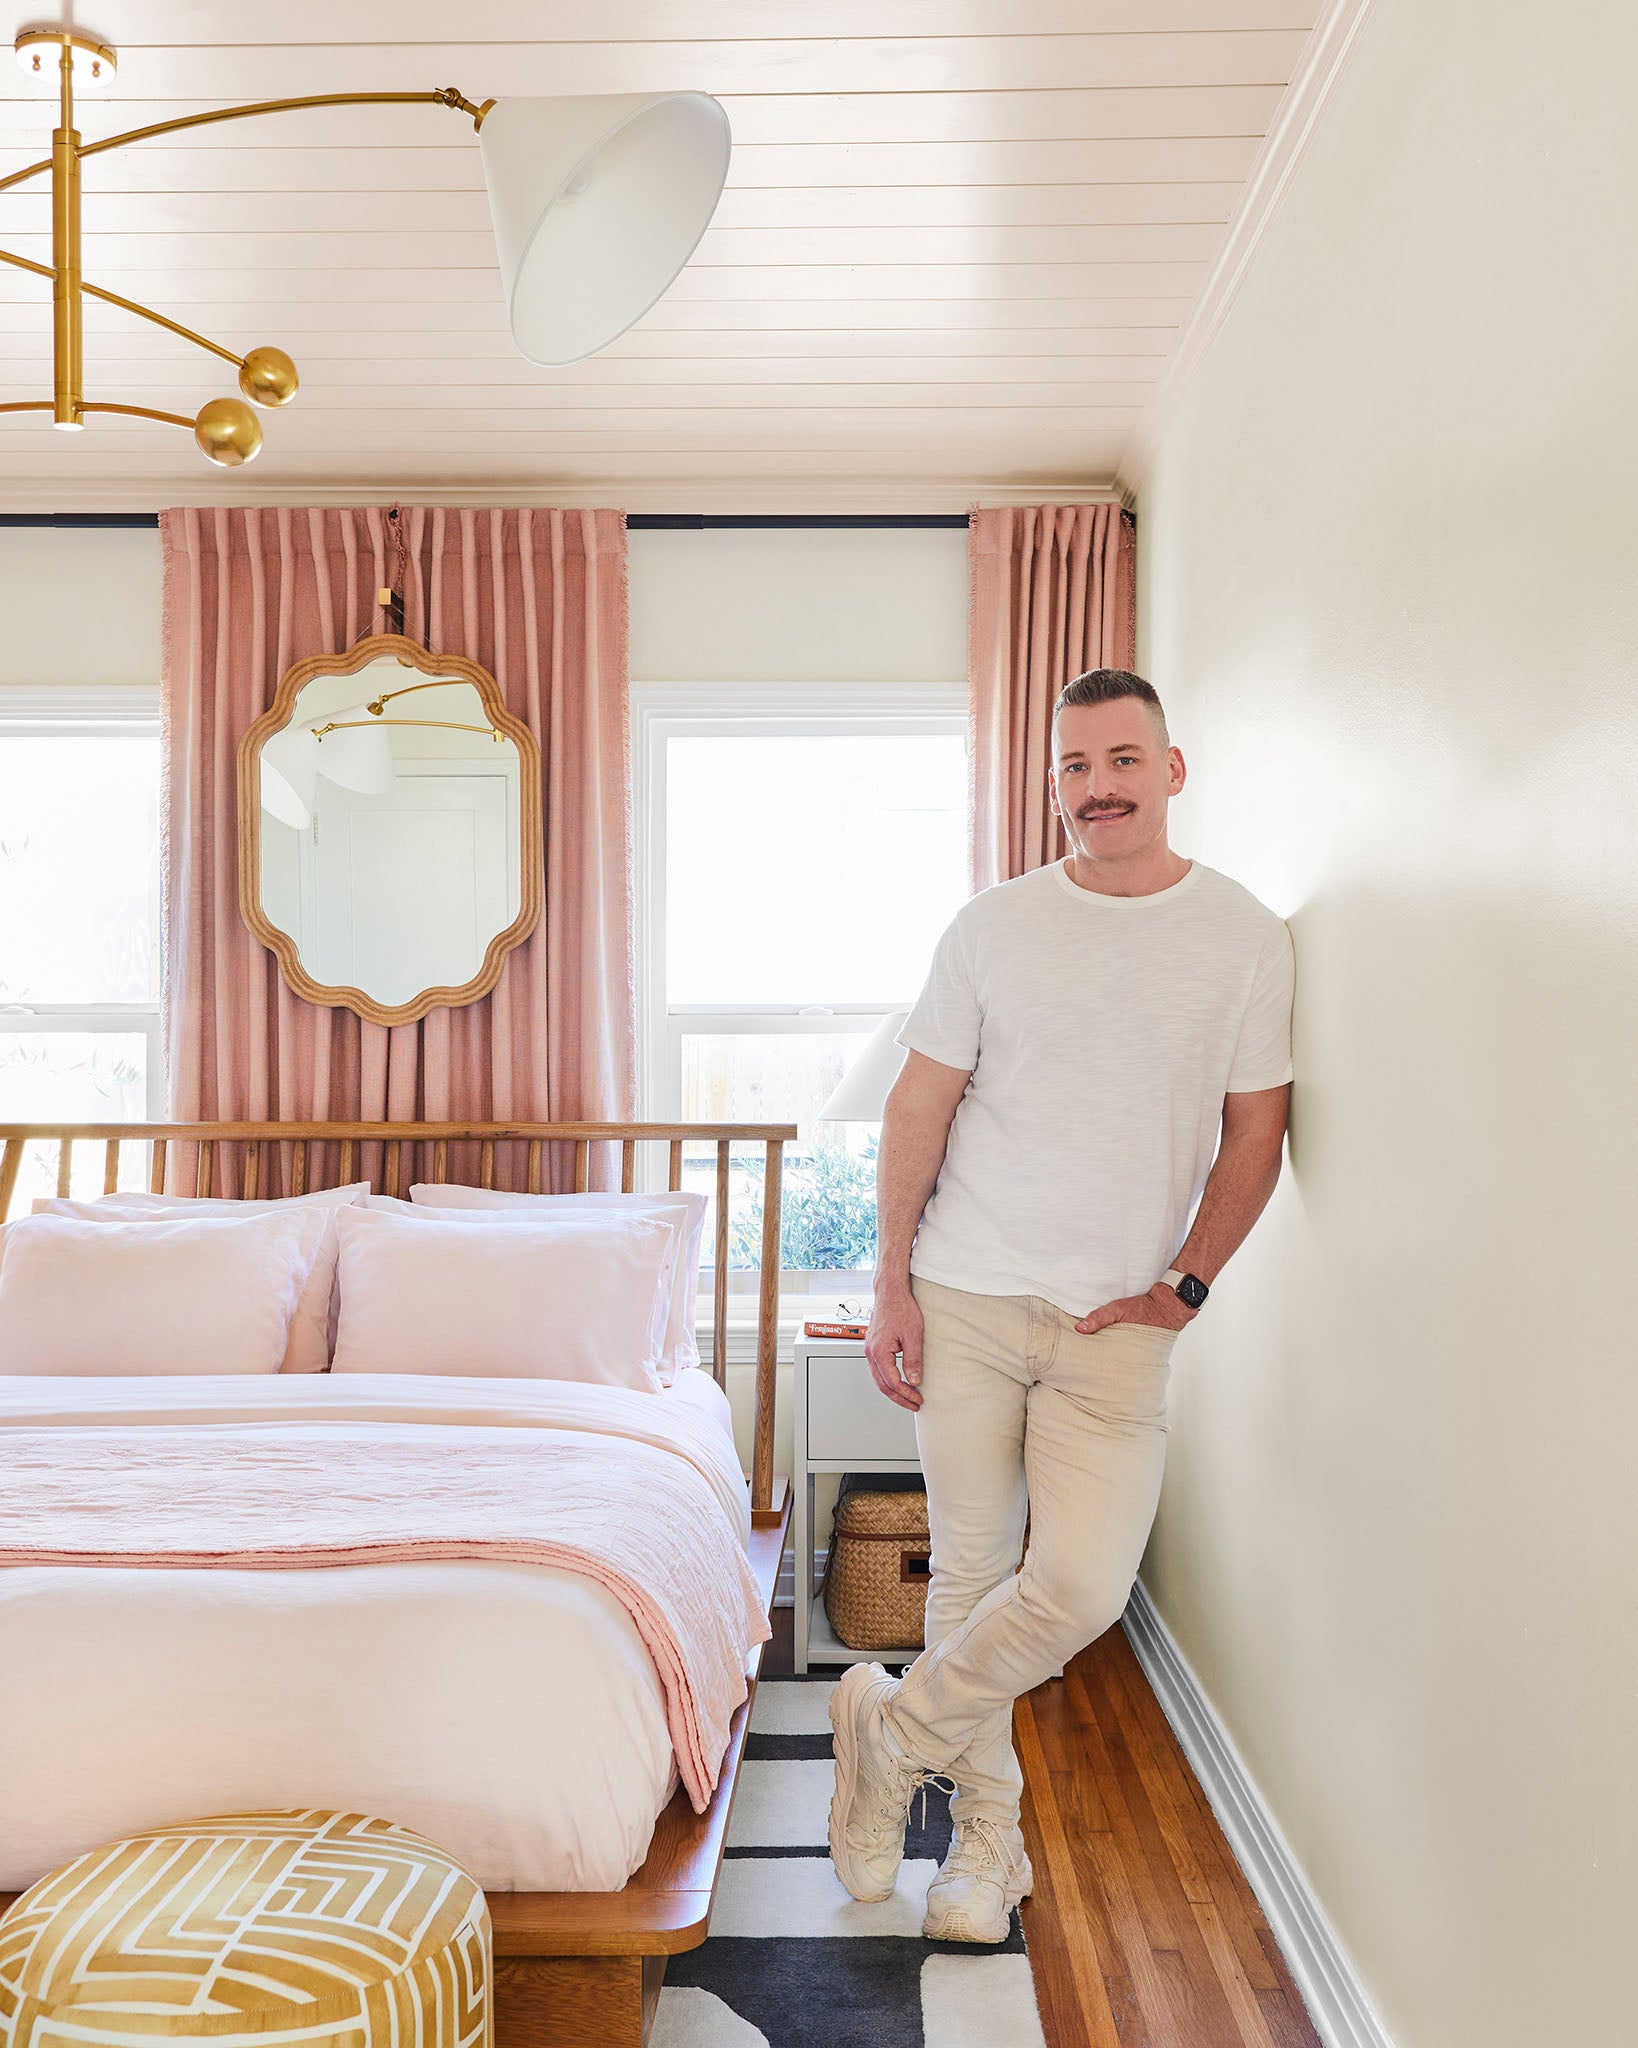 Designer Orlando Soria painted his ceiling pink for an impressive room upgrade.